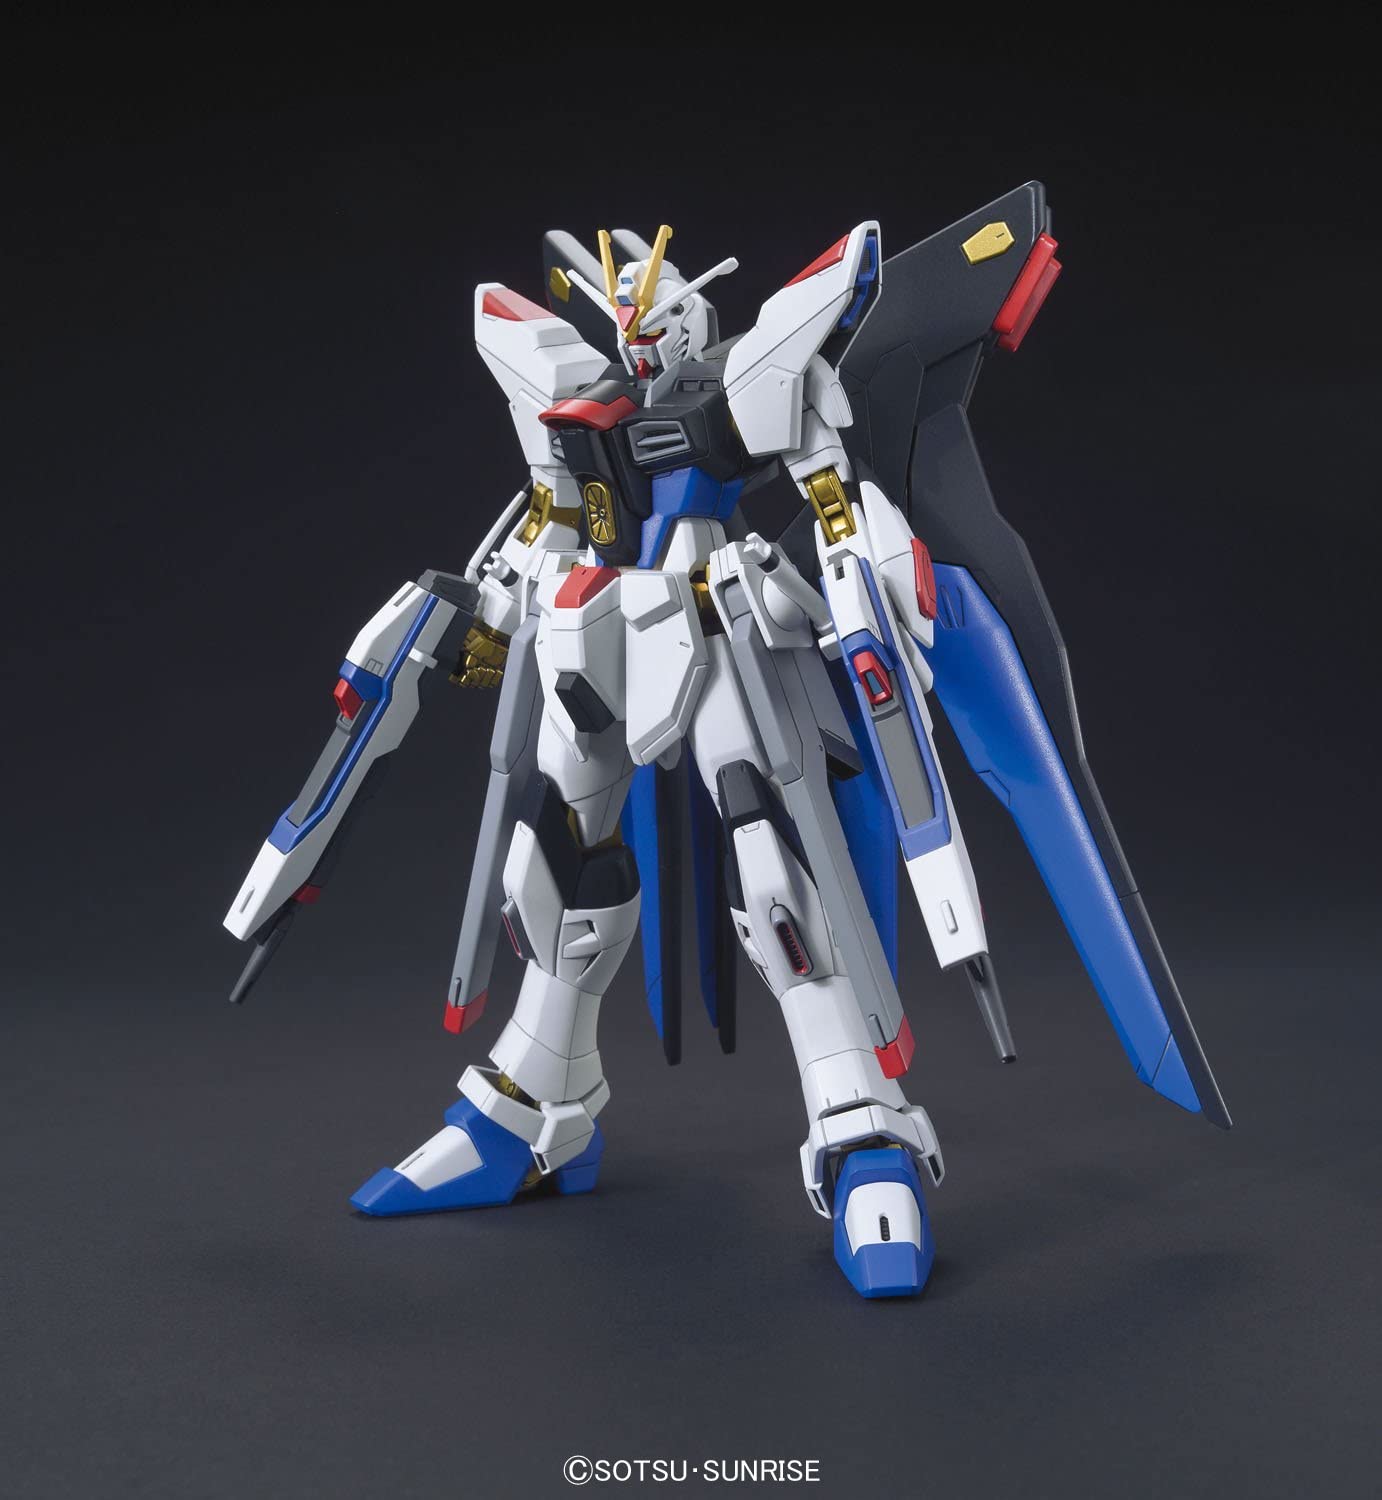 HGCE 1/144 Strike Freedom Gundam